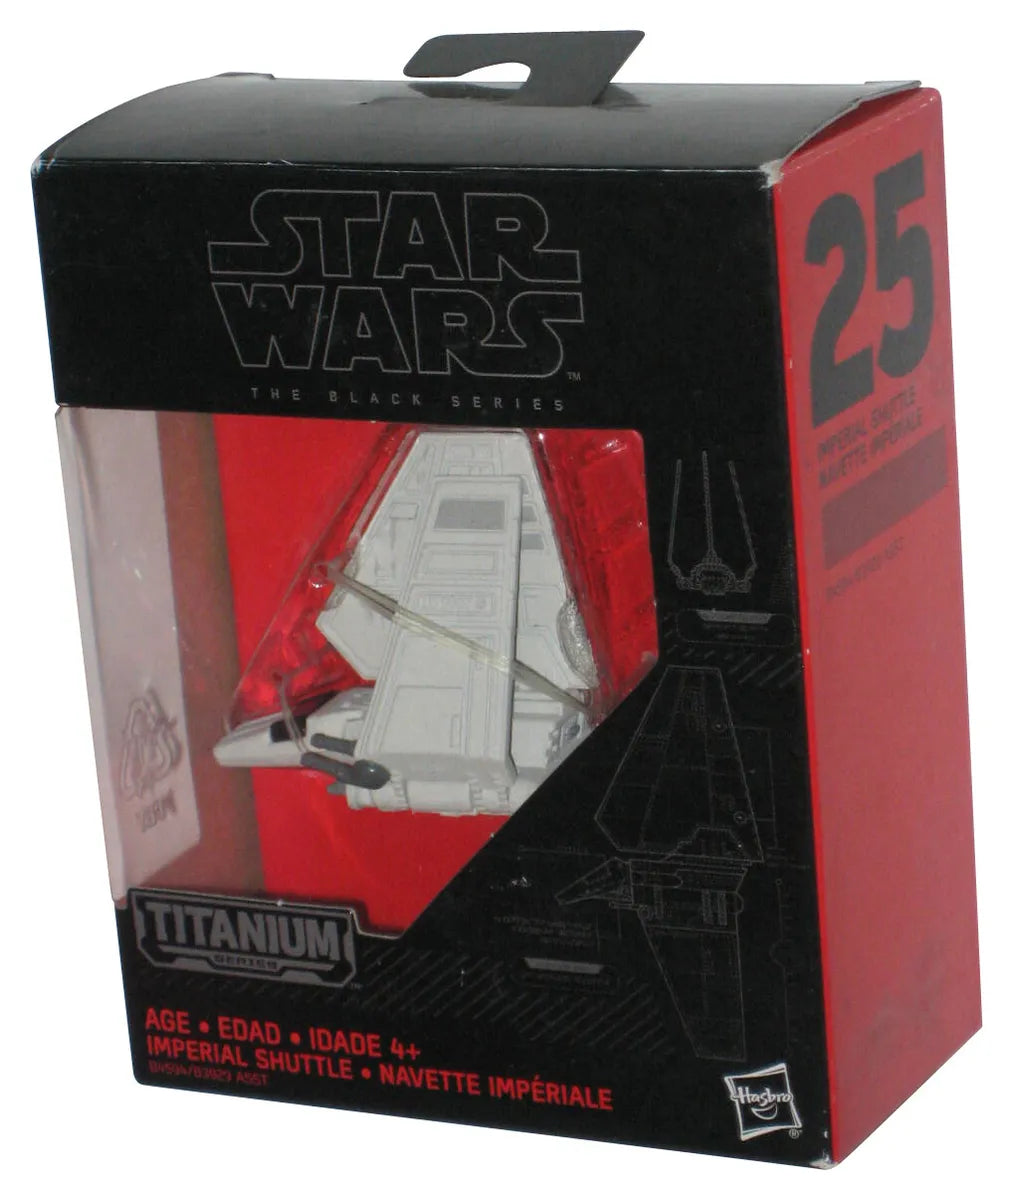 Star Wars The Black Series : Imperial Shuttle Titanium Figure